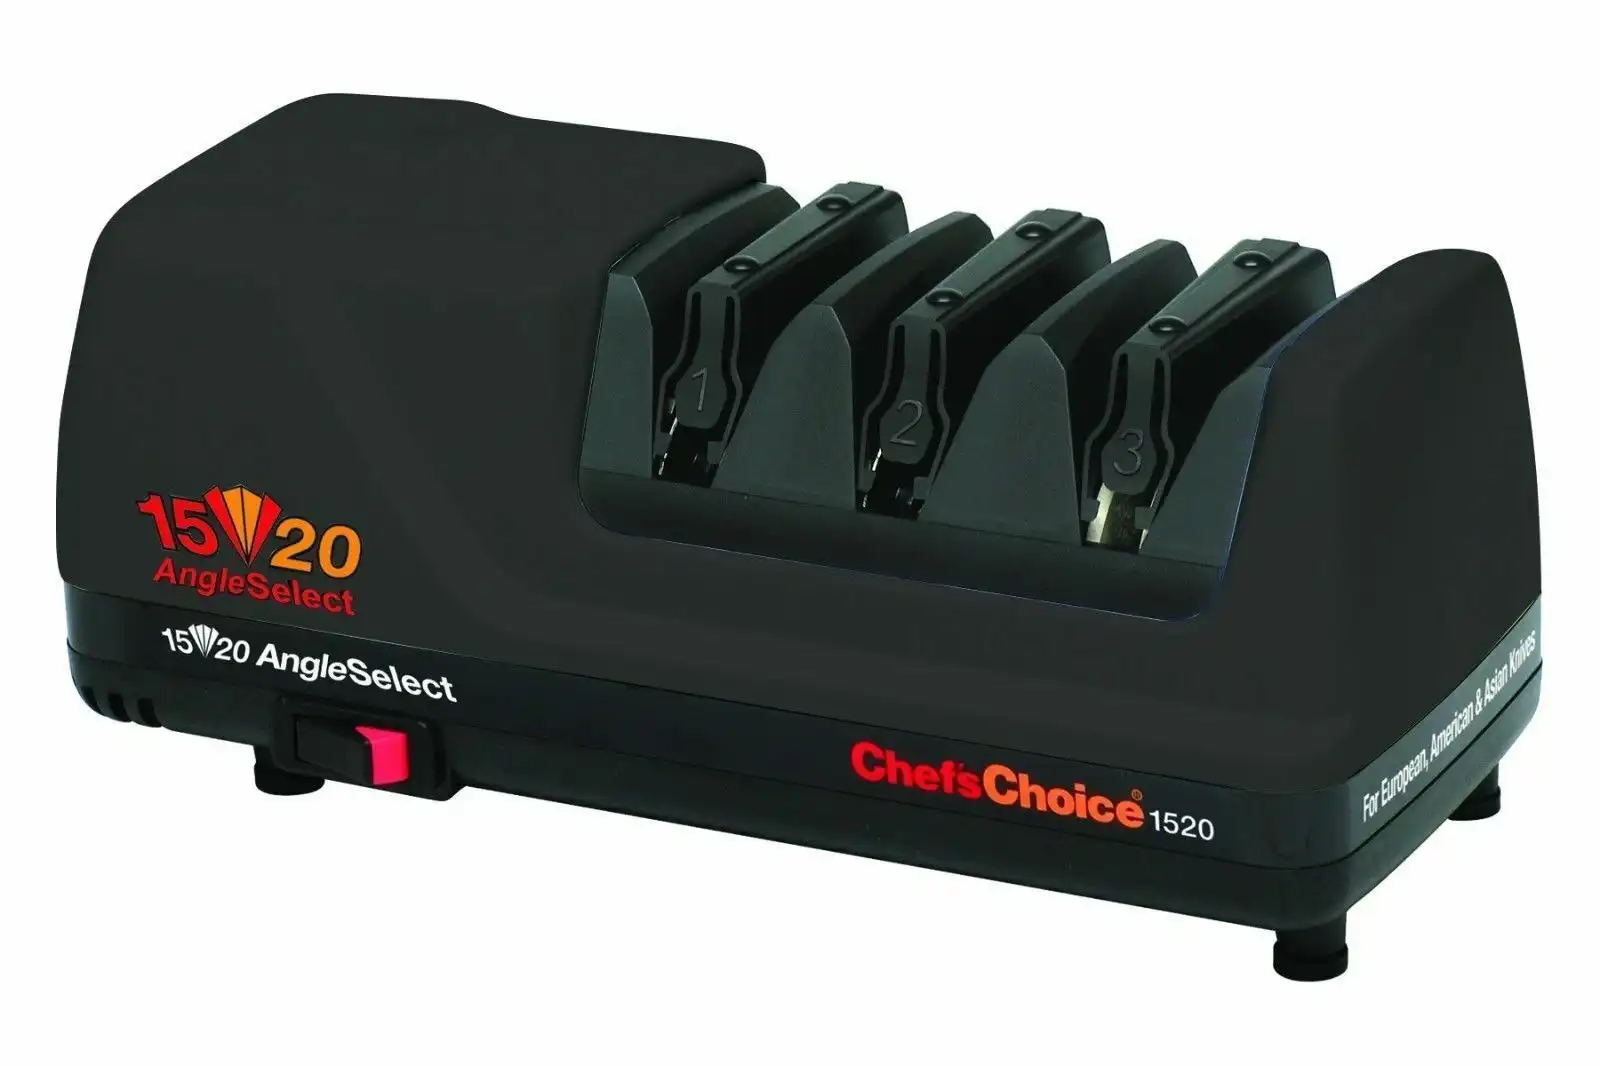 Chef's Choice 1520 Angle Select Diamond Professional Electric Sharpener- Black